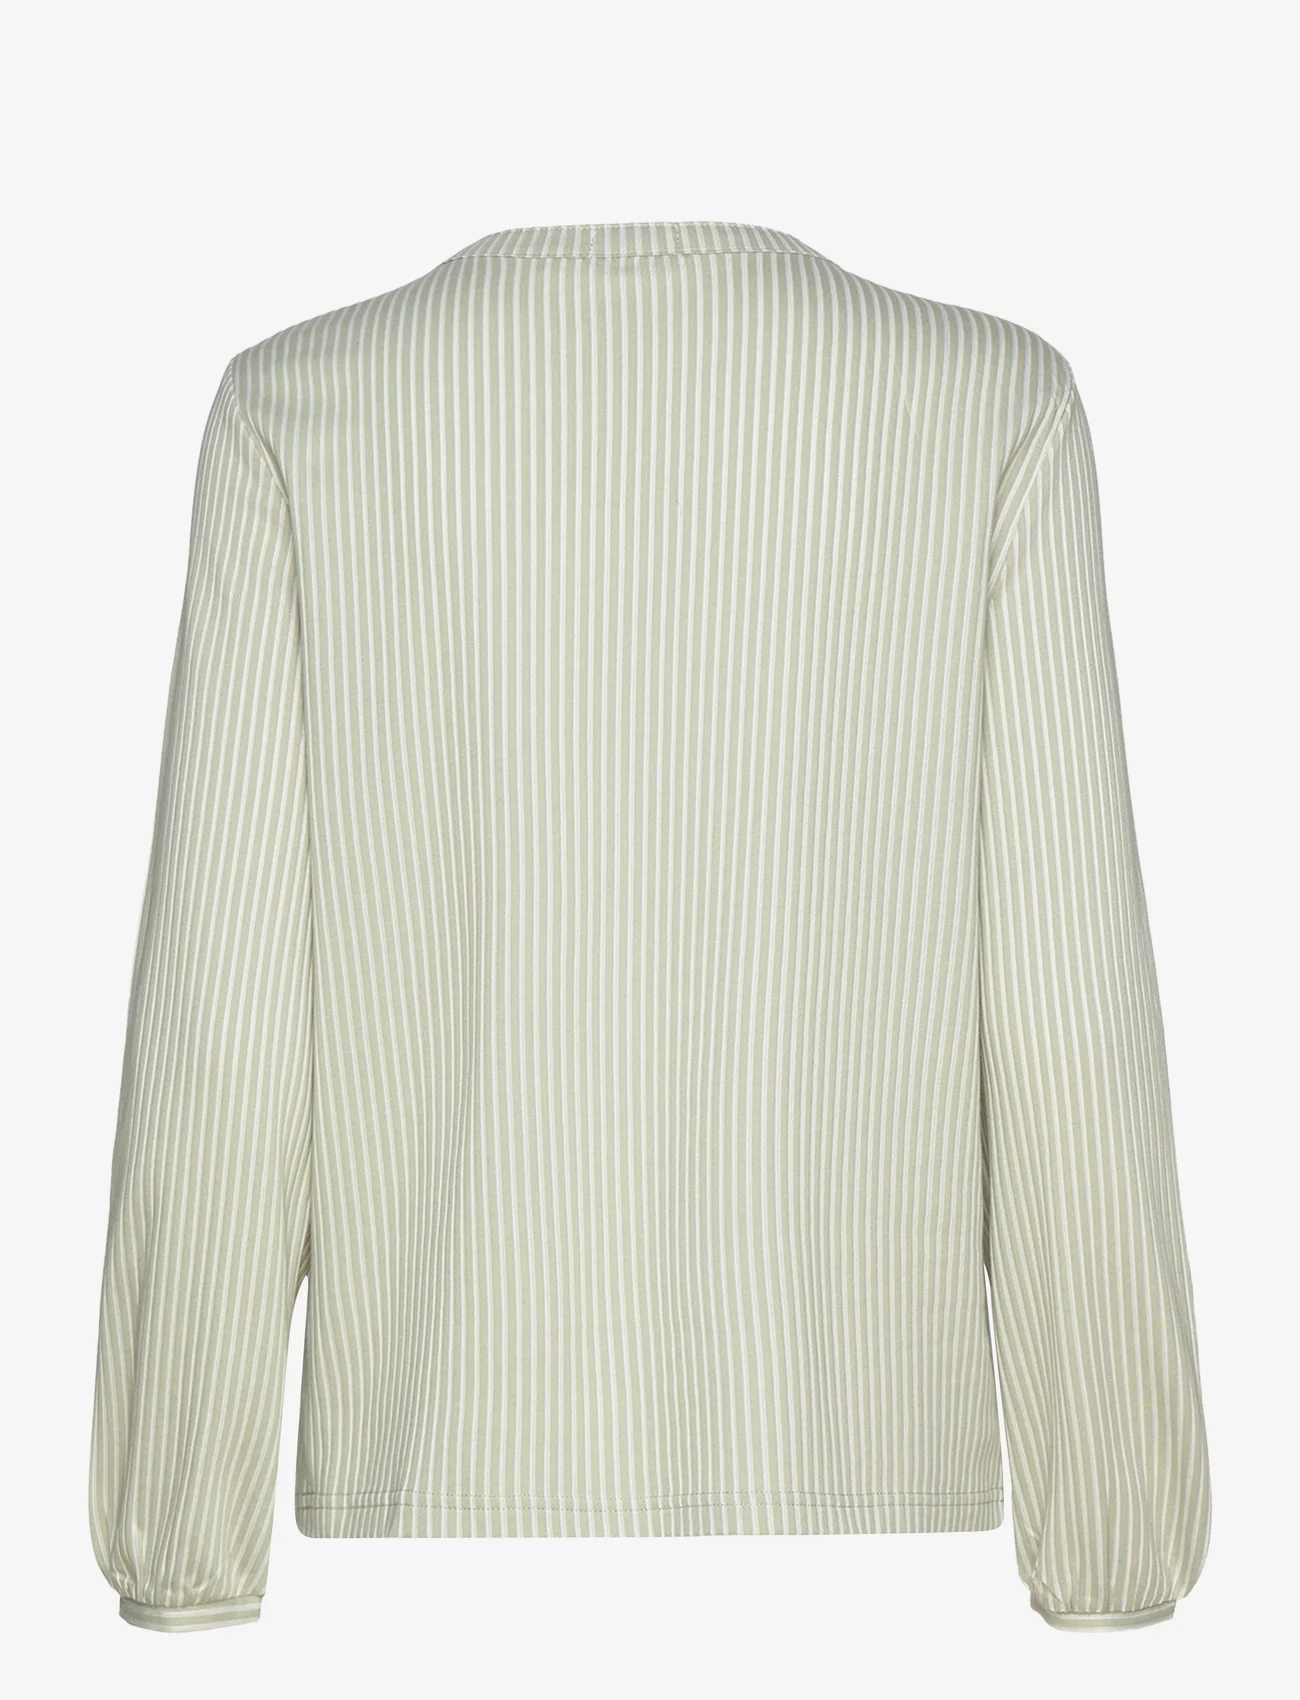 Tom Tailor - T-shirt blouse vertical stripe - blūzes ar garām piedurknēm - desert green white thin stripe - 1